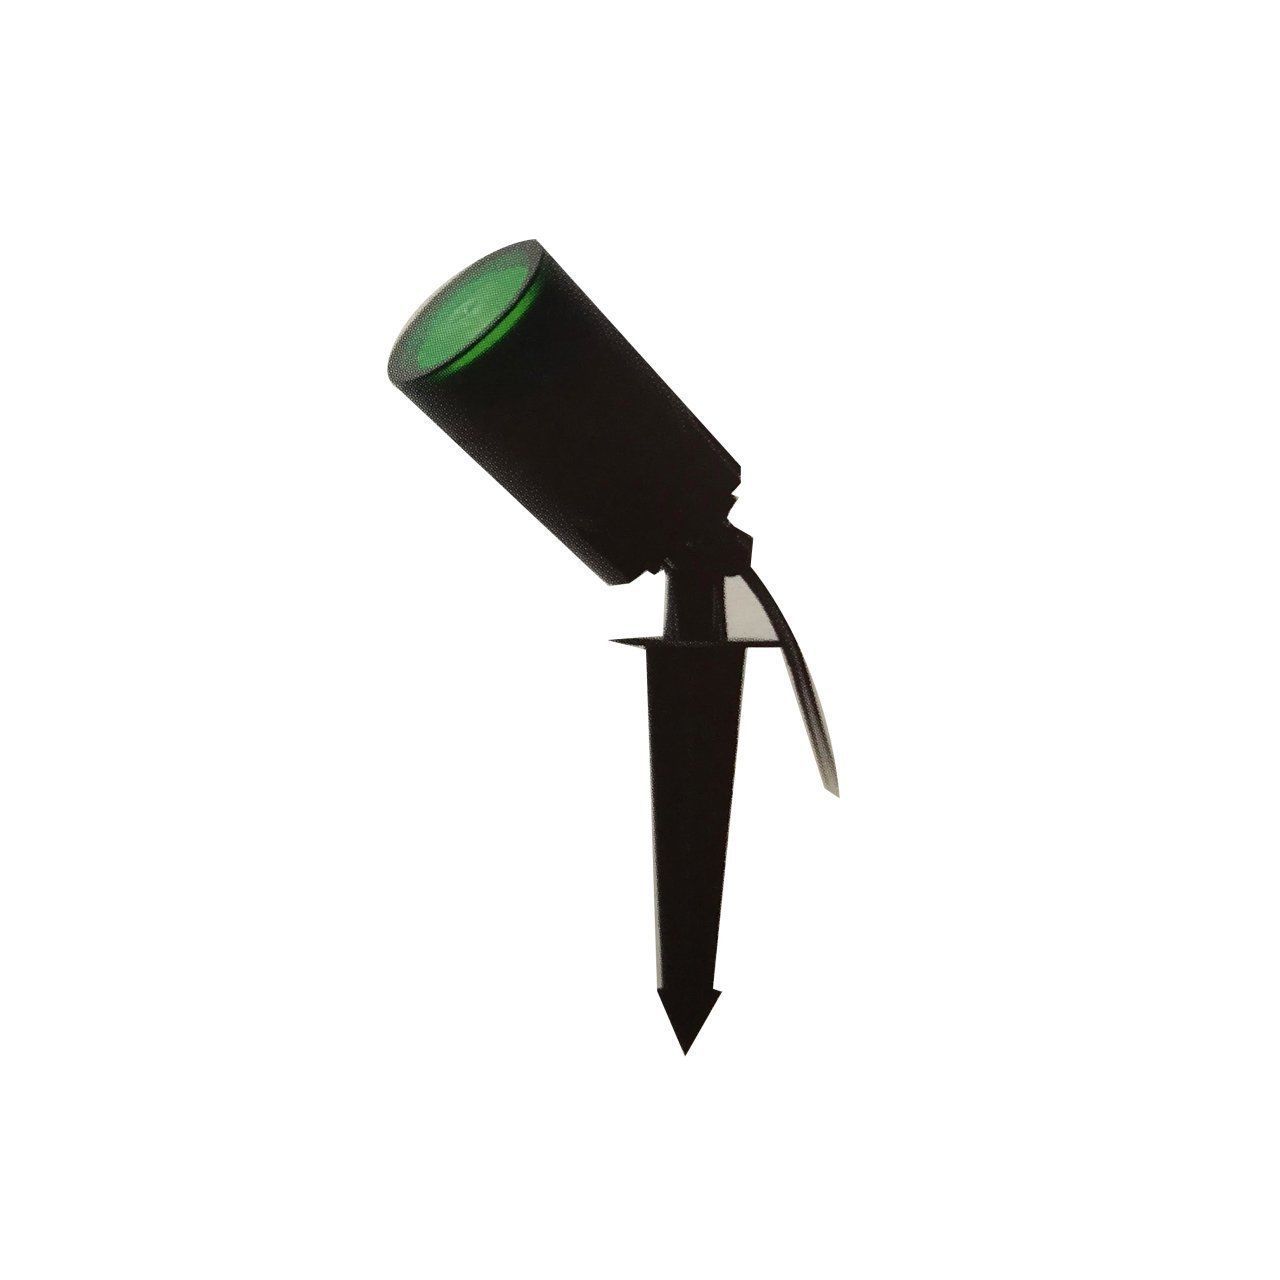 Cata Çim Kazığı Bahçe Armatürü CT-7306 - Yeşil Renk